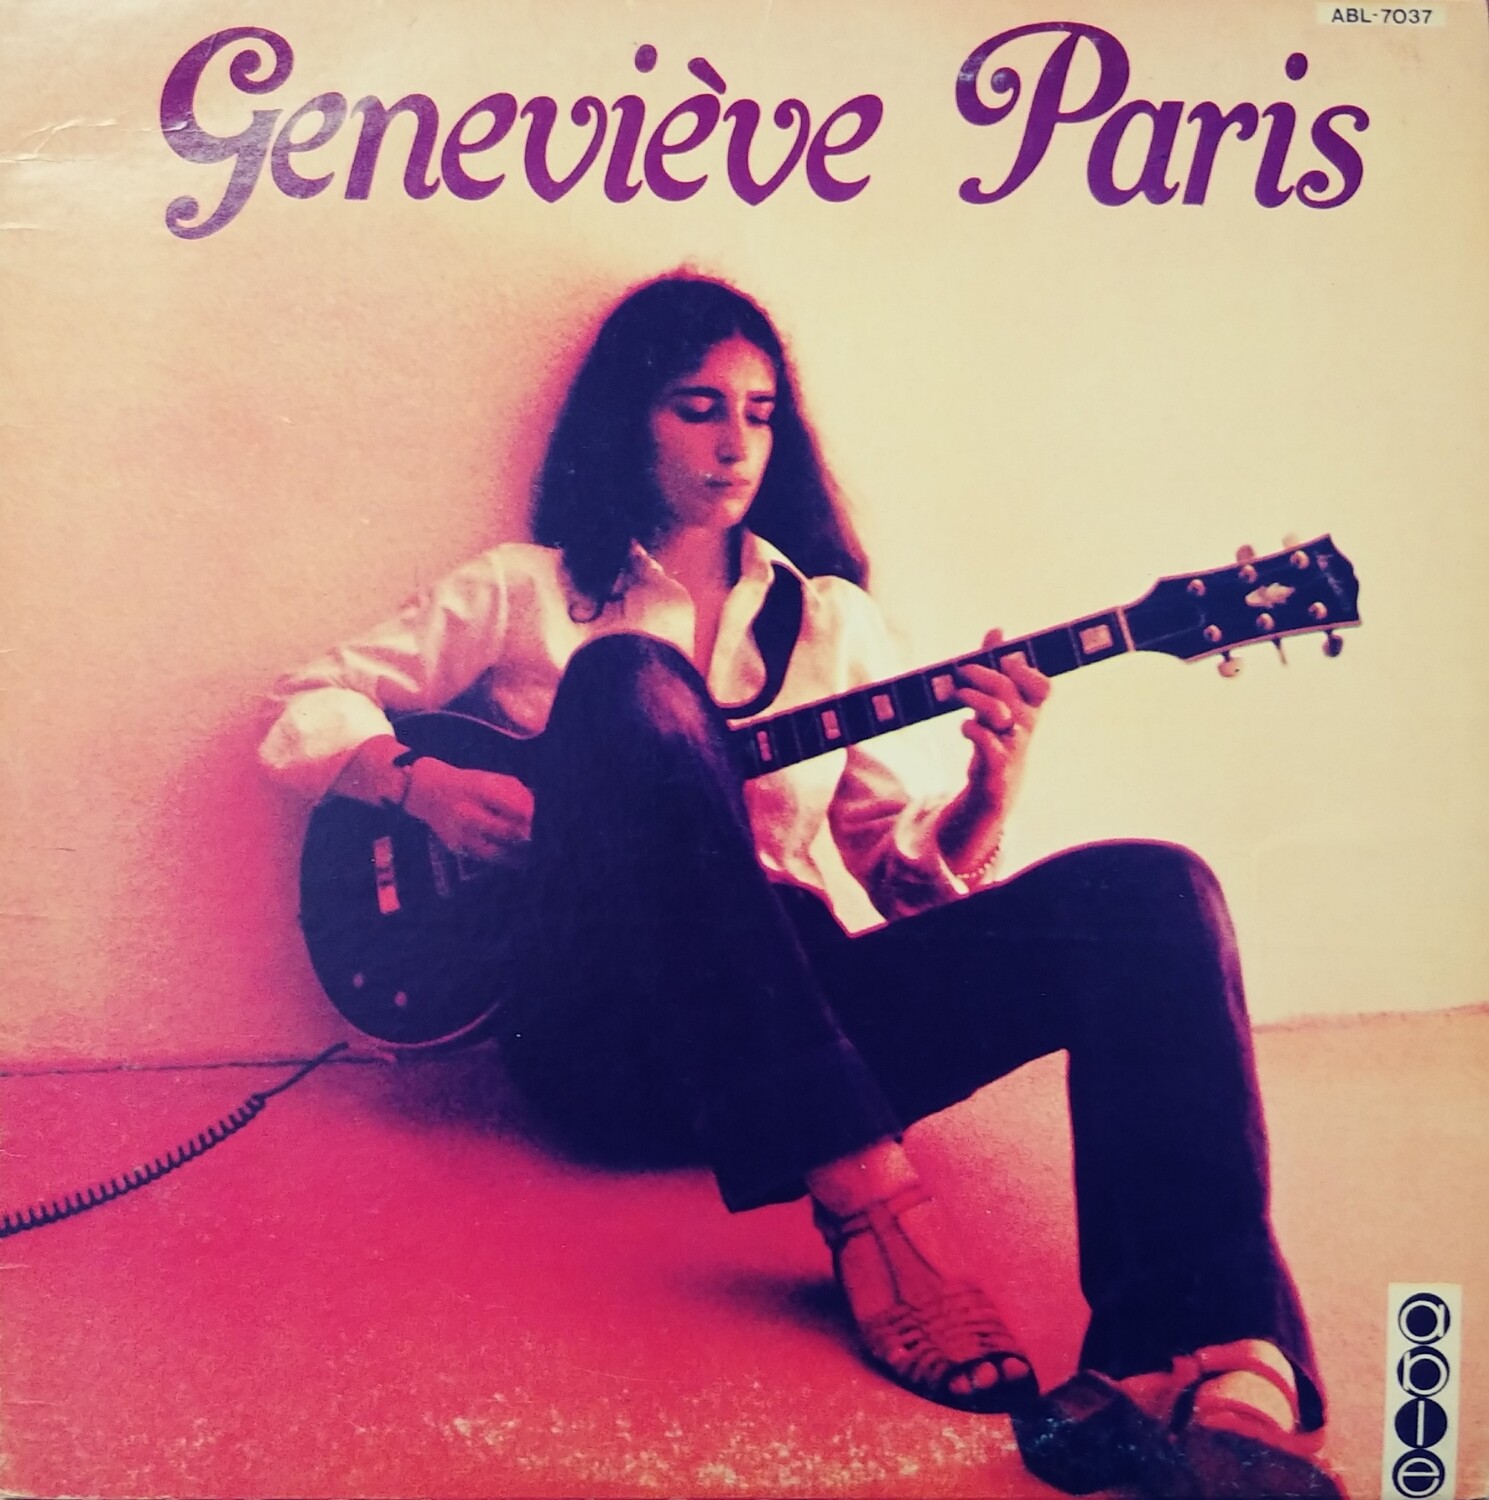 Geneviève Paris - Geneviève Paris (1976)